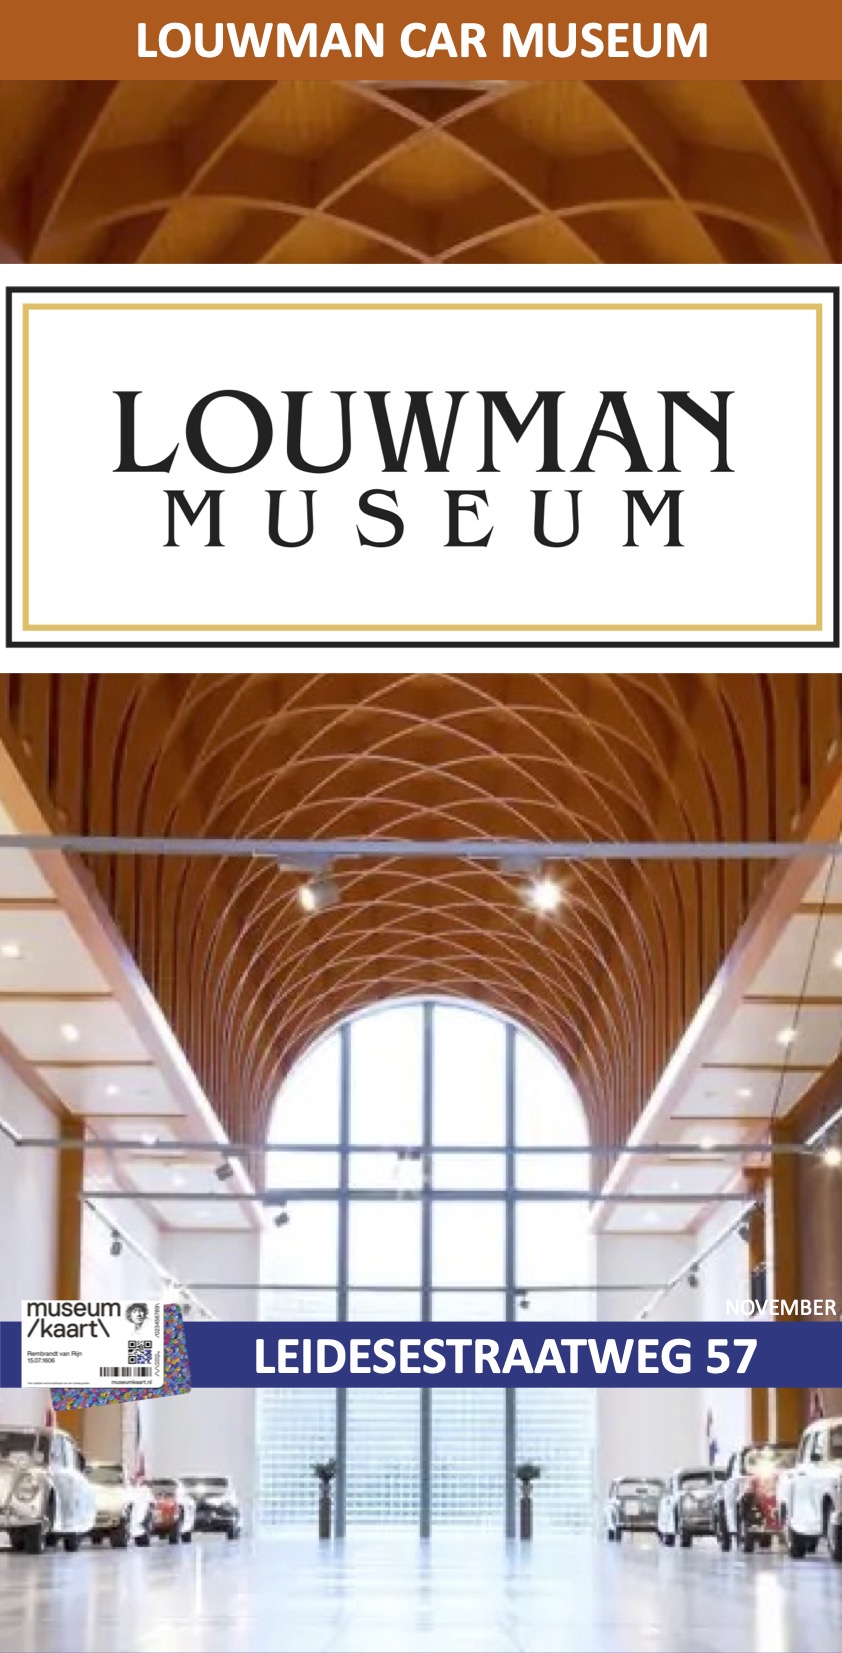 Louwman Automuseum Wassenaar Museumkaart november